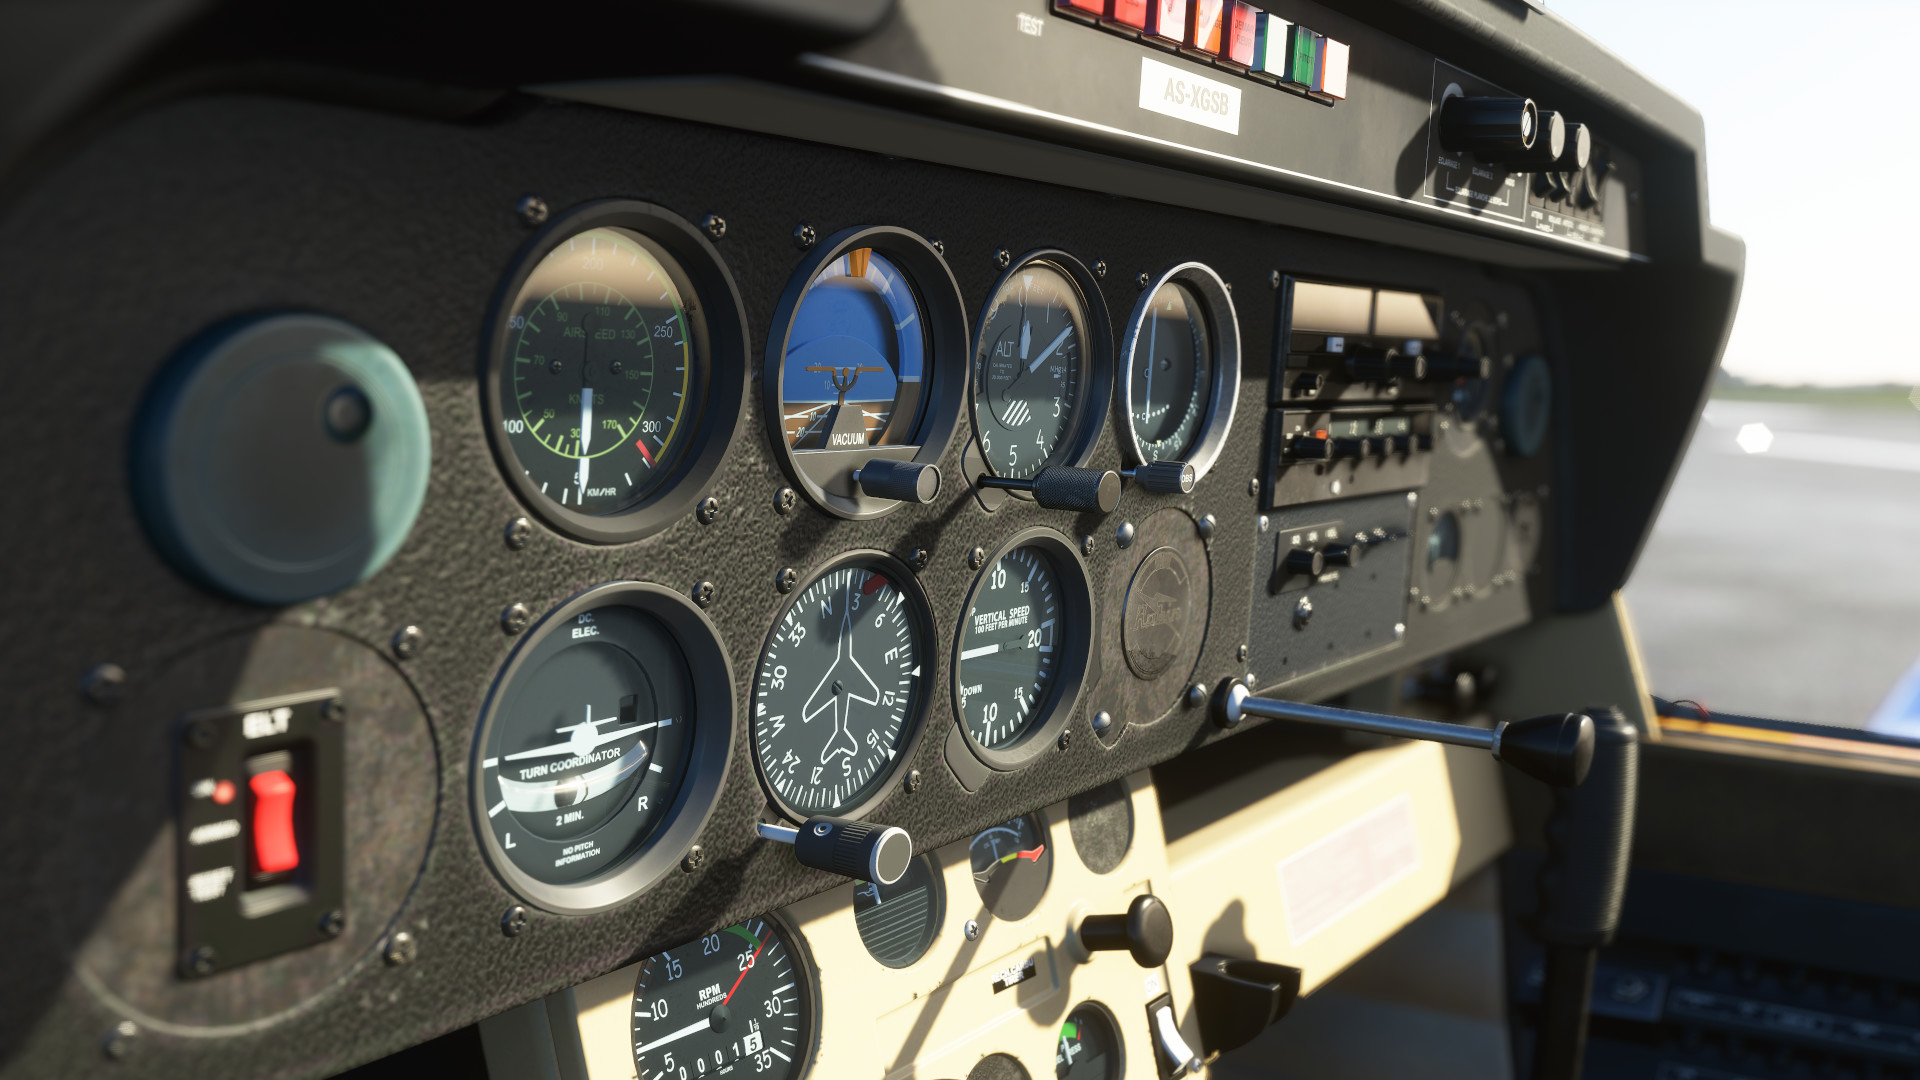 Microsoft Flight Simulator Deluxe Game Of The Year Edition EU Xbox Series X,S / Windows 10 CD Key